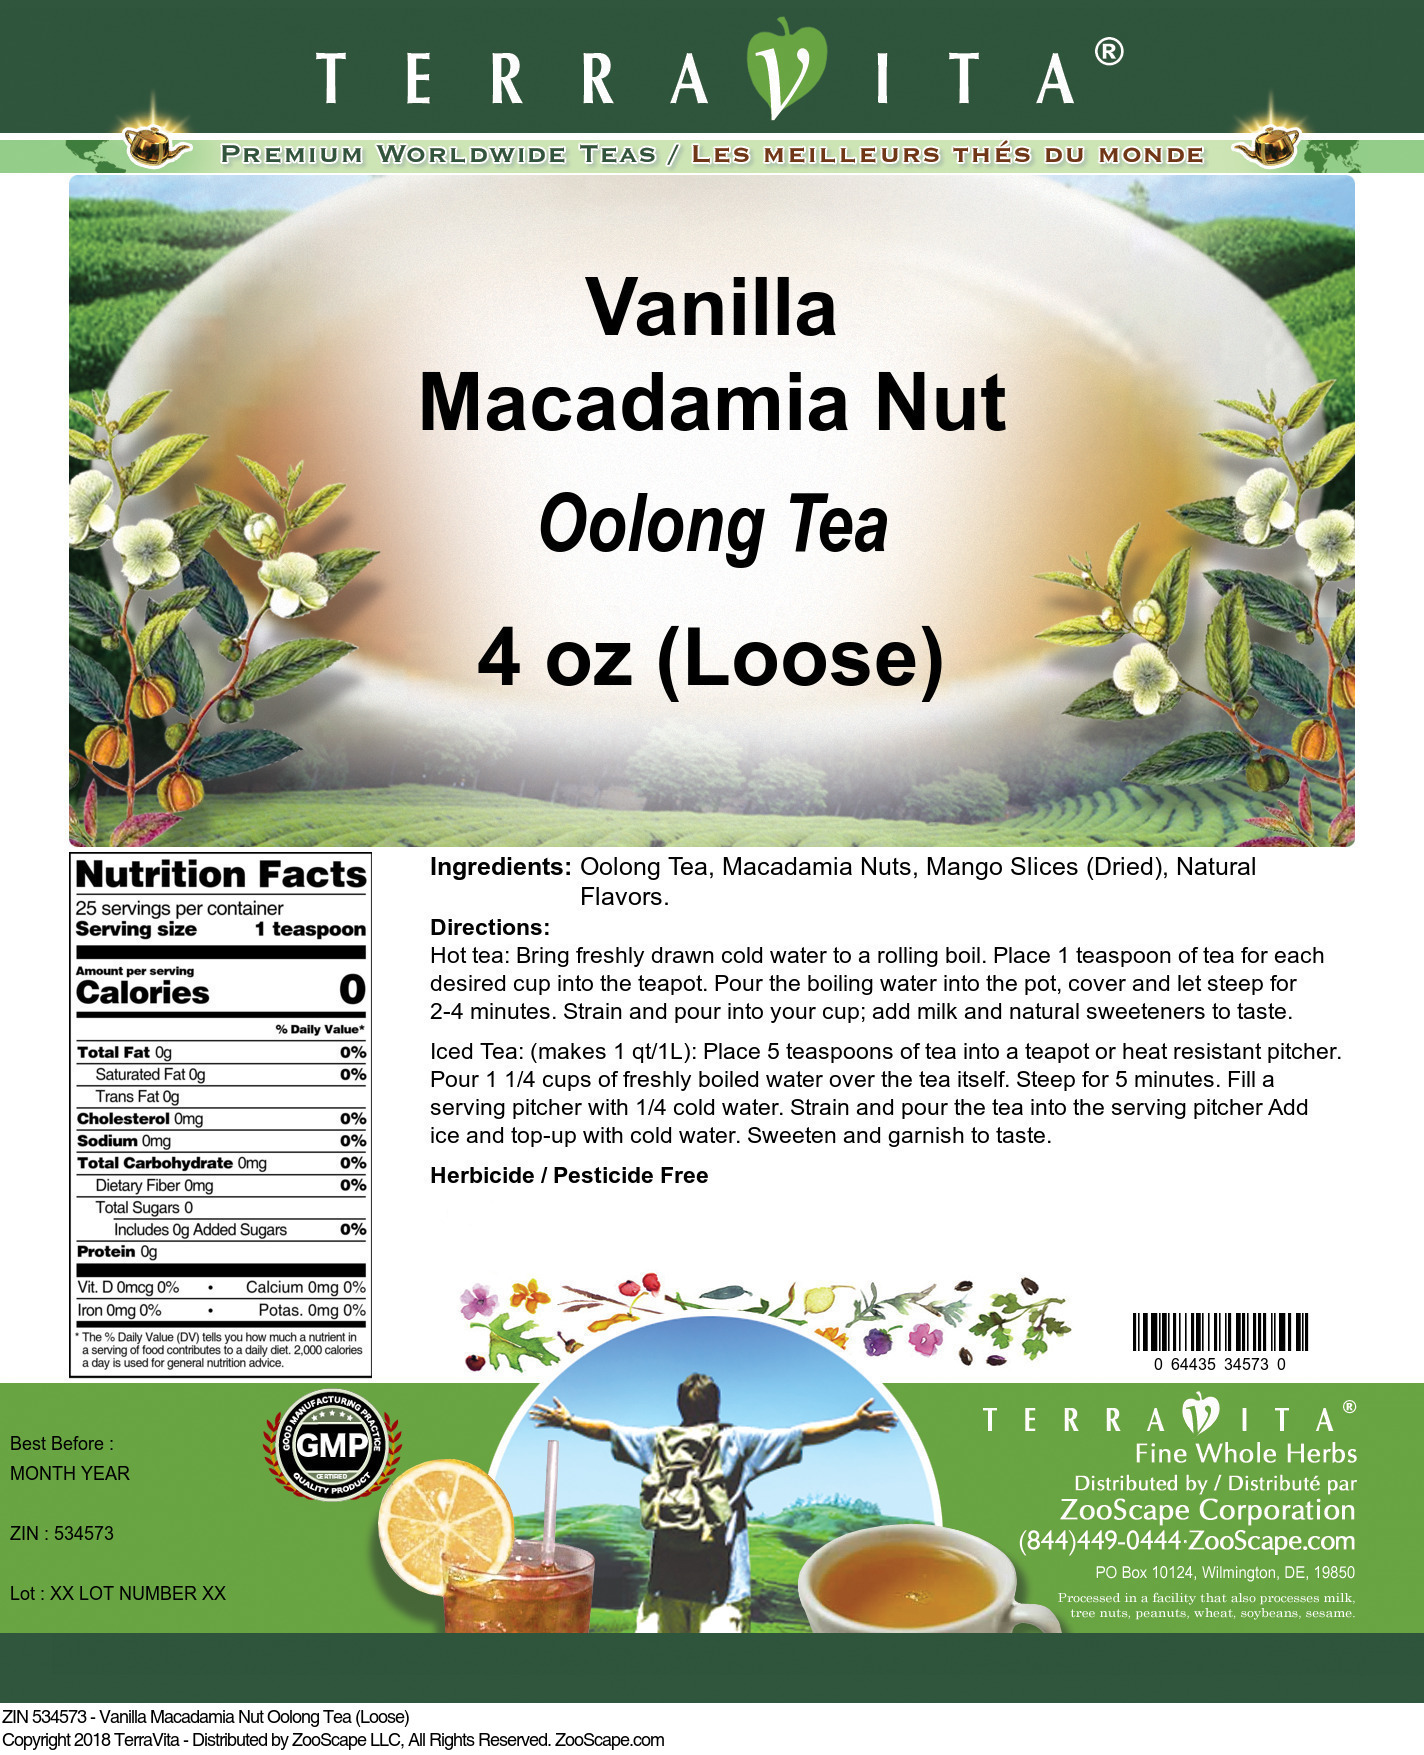 Vanilla Macadamia Nut Oolong Tea (Loose) - Label